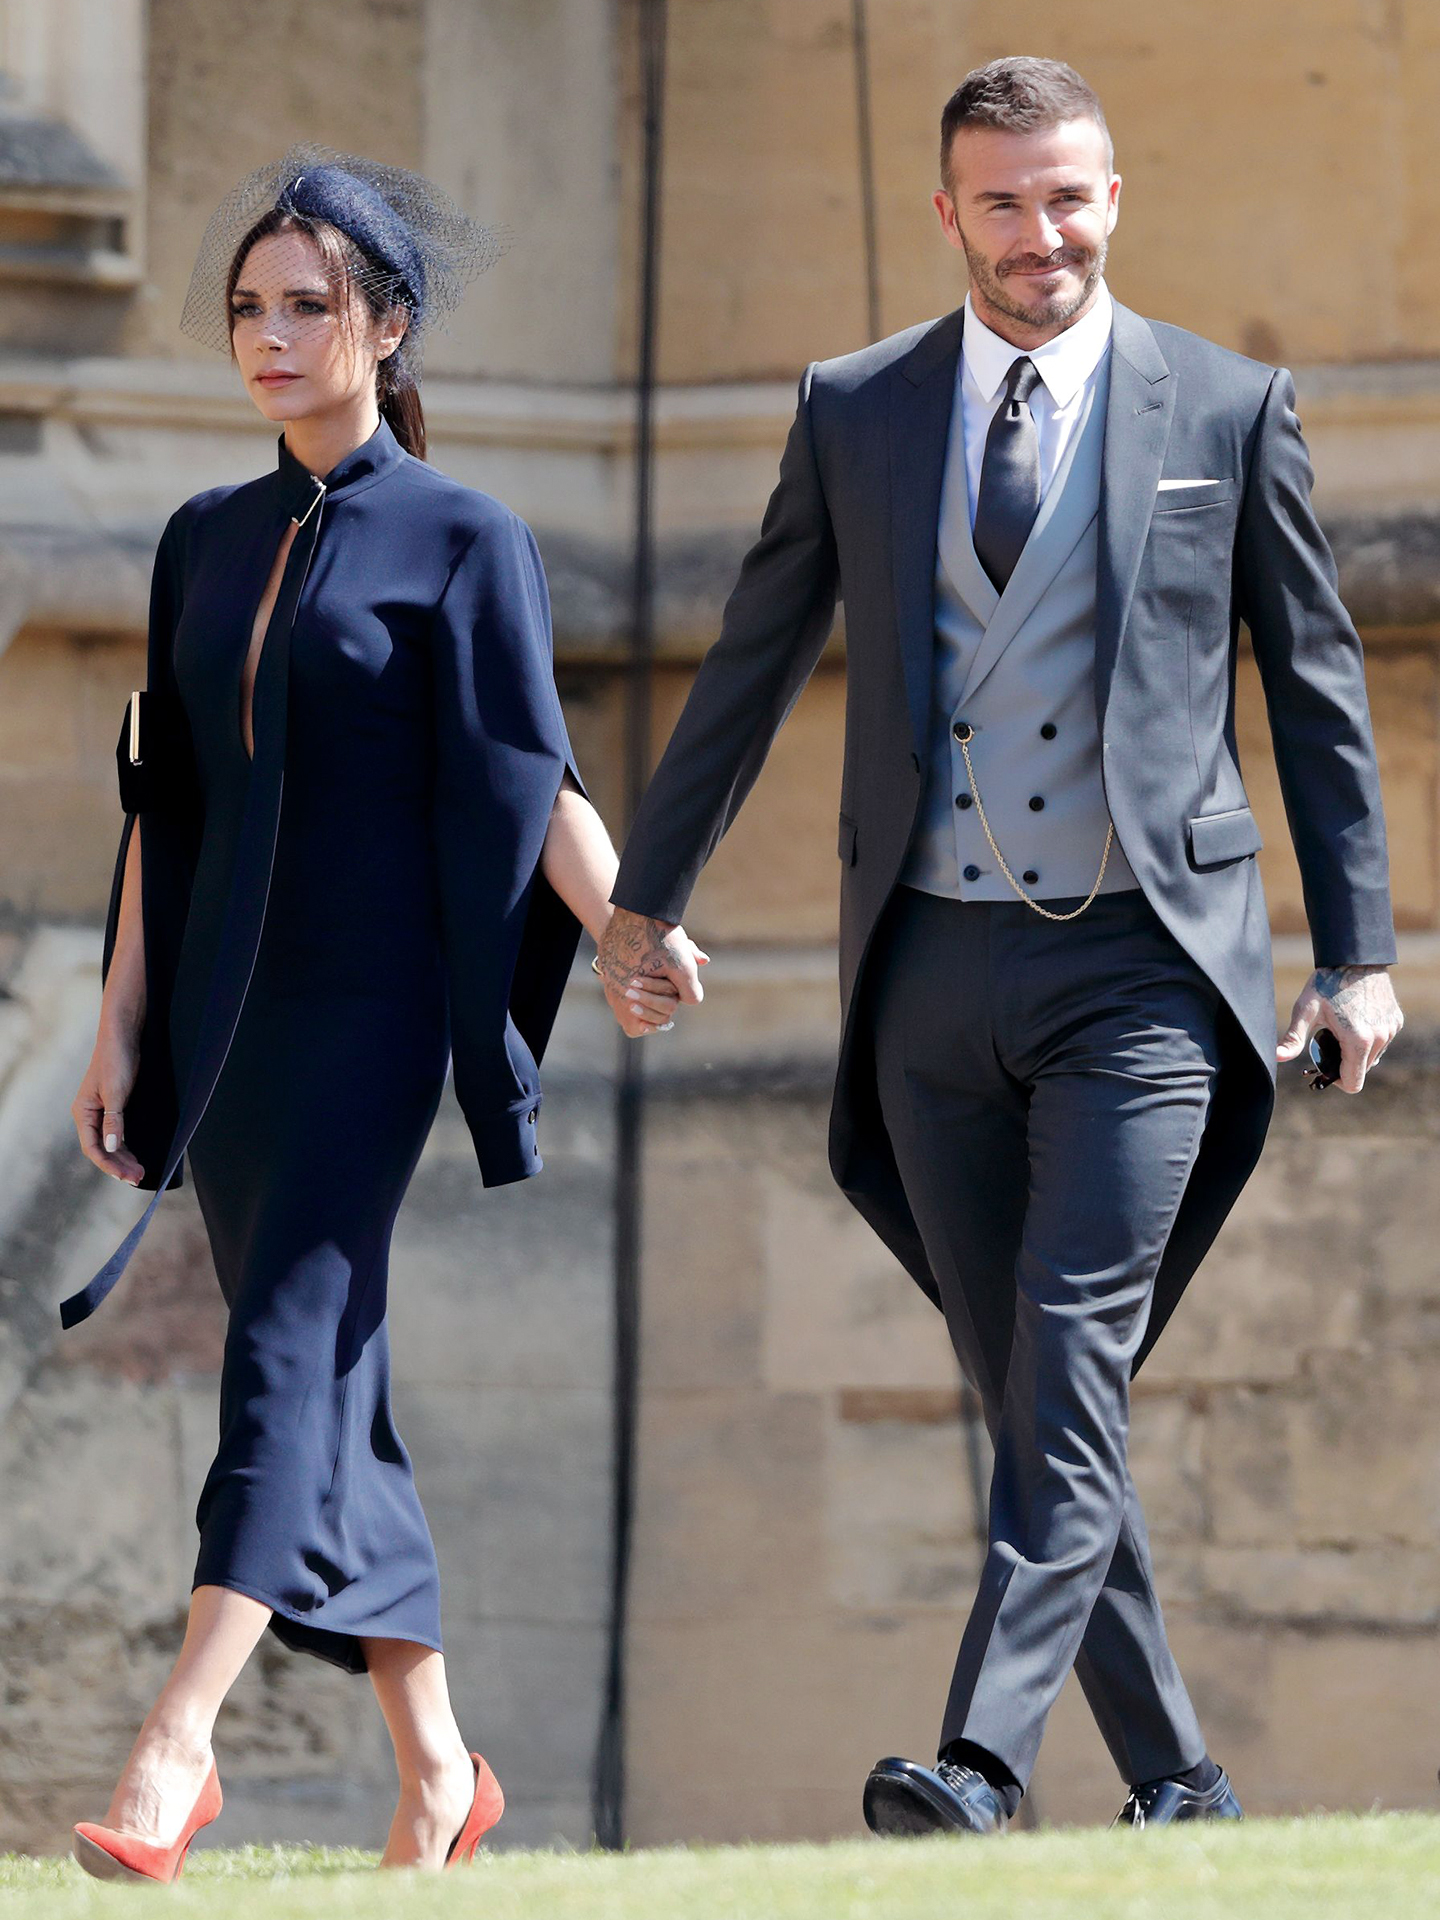 David Beckham wears charcoal grey morning dress coat as a wedding guest